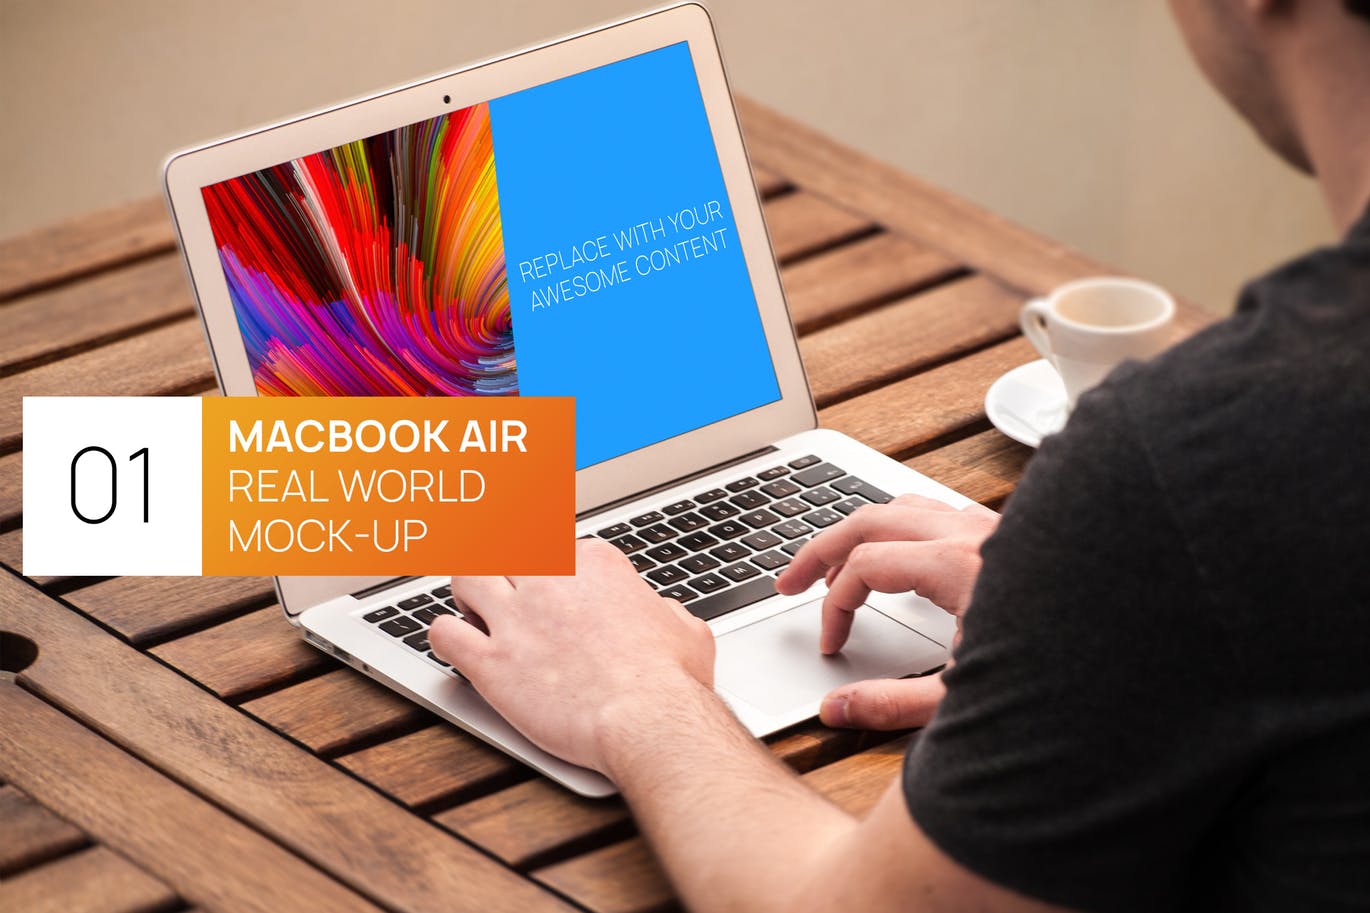 Macbook Air实景使用场景素材中国精选样机模板v1 Person Using MacBook Air Real World Photo Mock-up插图